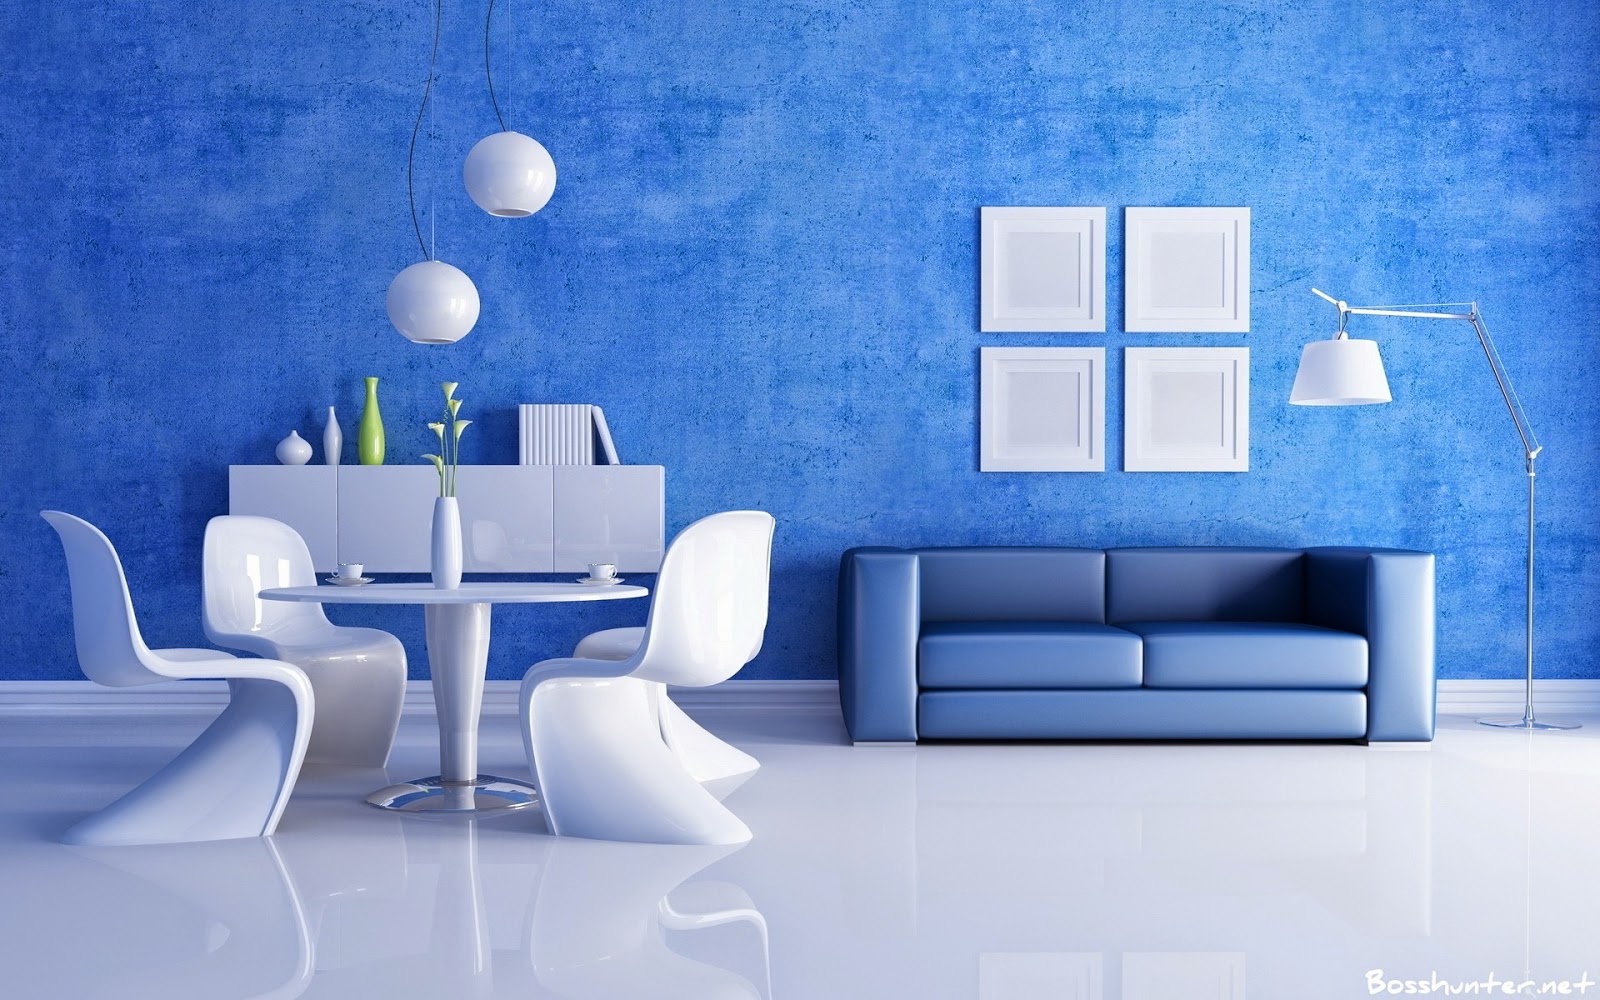 Wallpaper Borders For Living Room Uk Best Top Newest In 2016